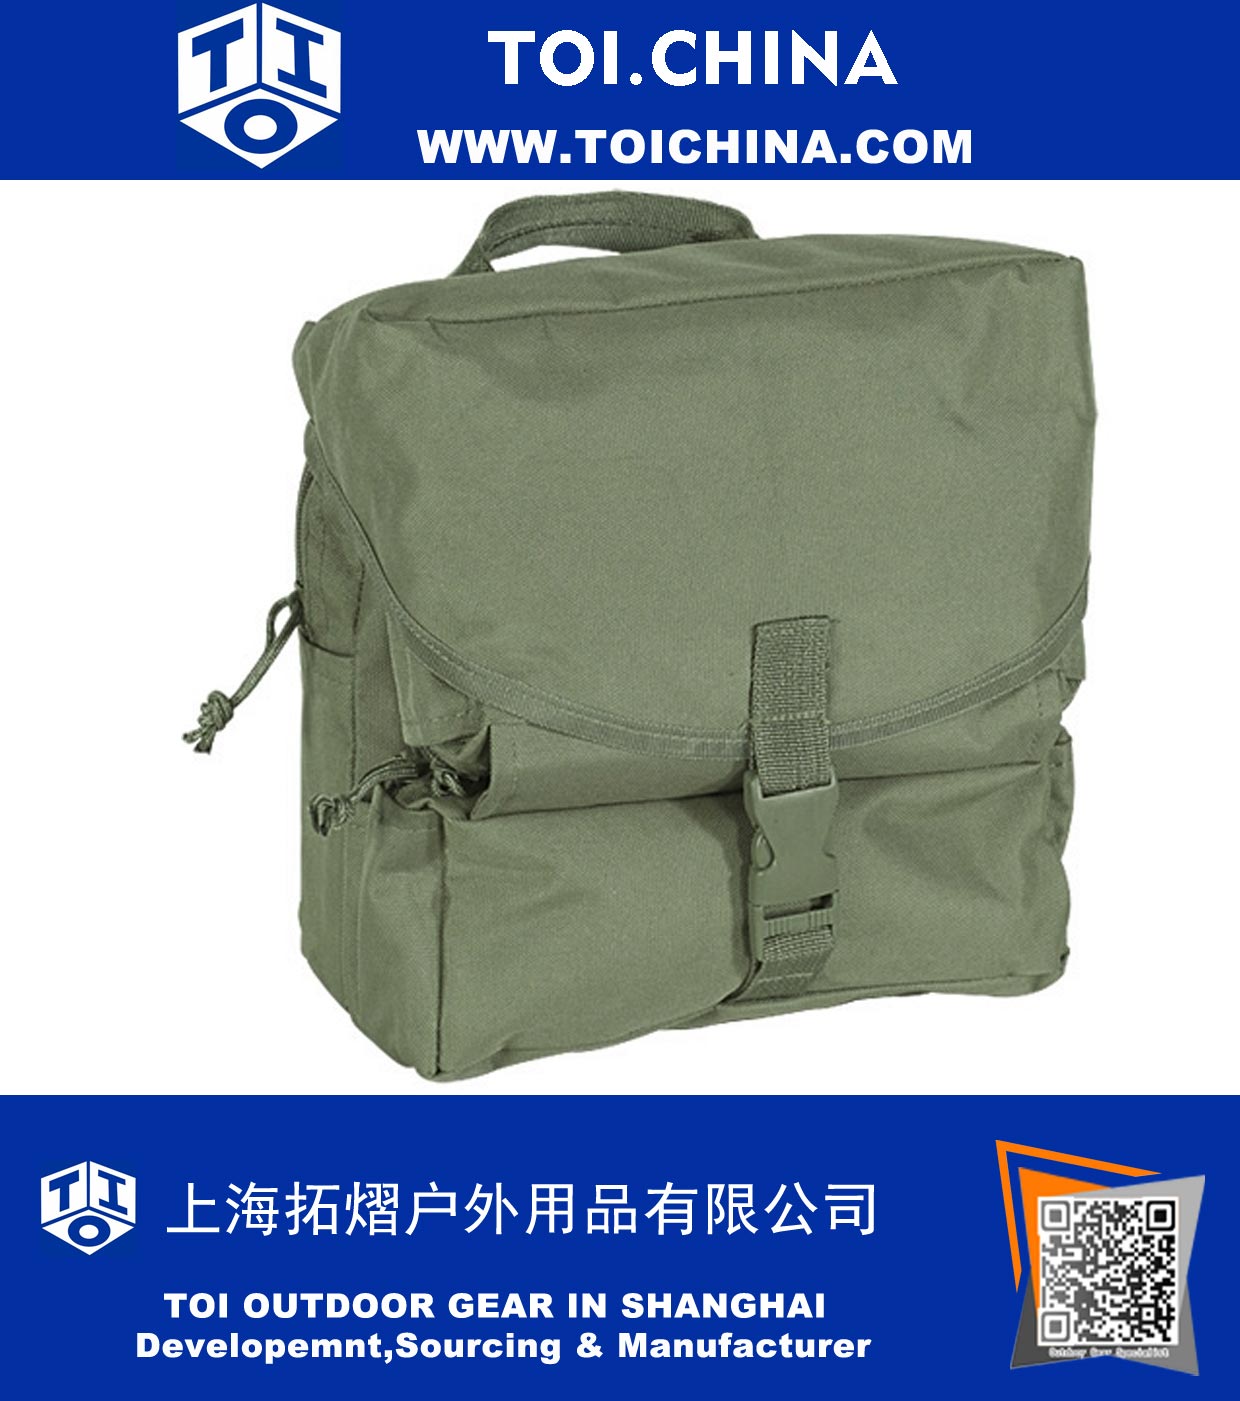 Tri-Fold Medic Bags